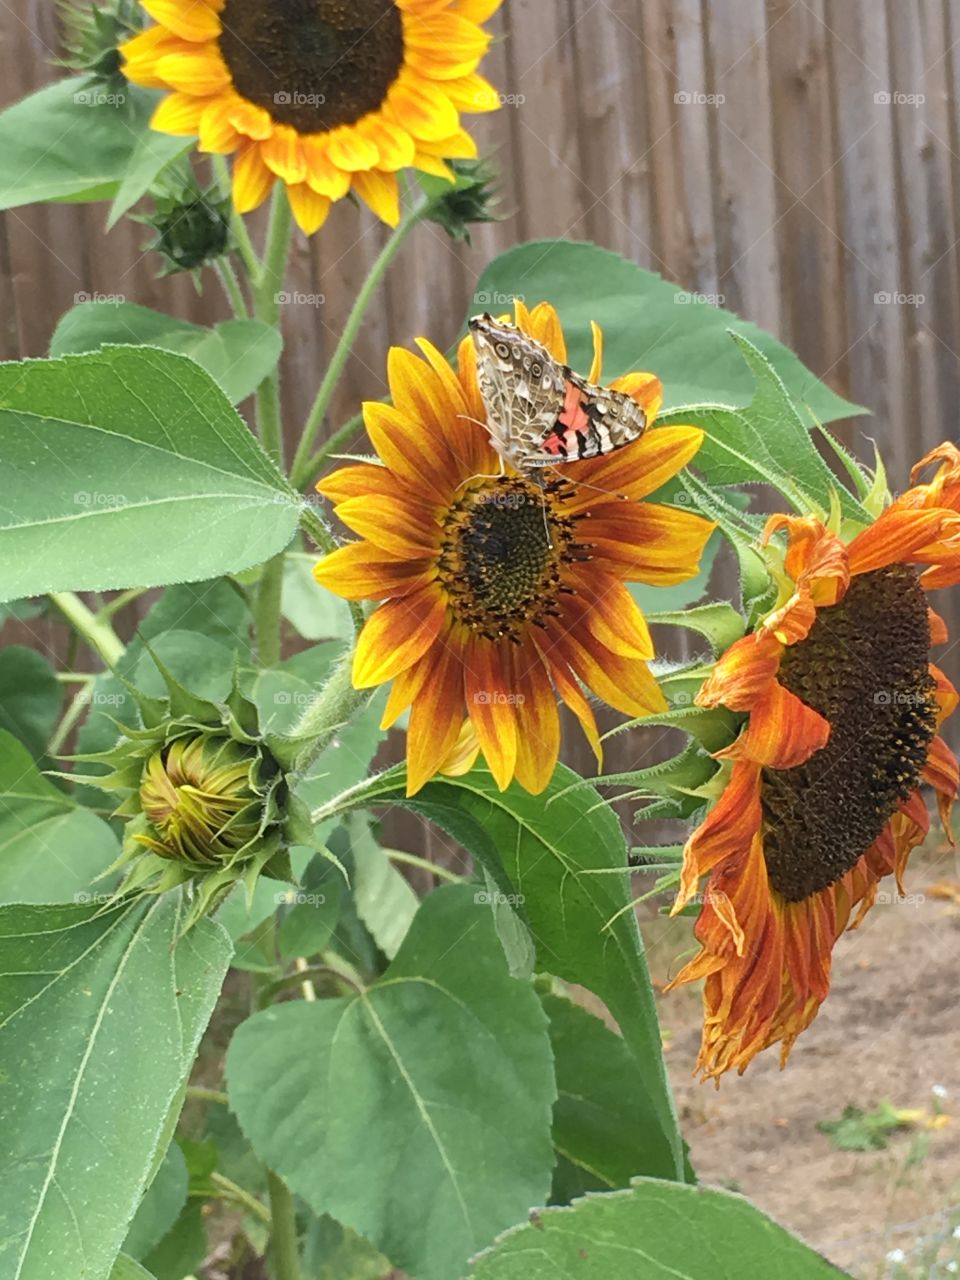 A butterfly enjoying the sunflower in the garden